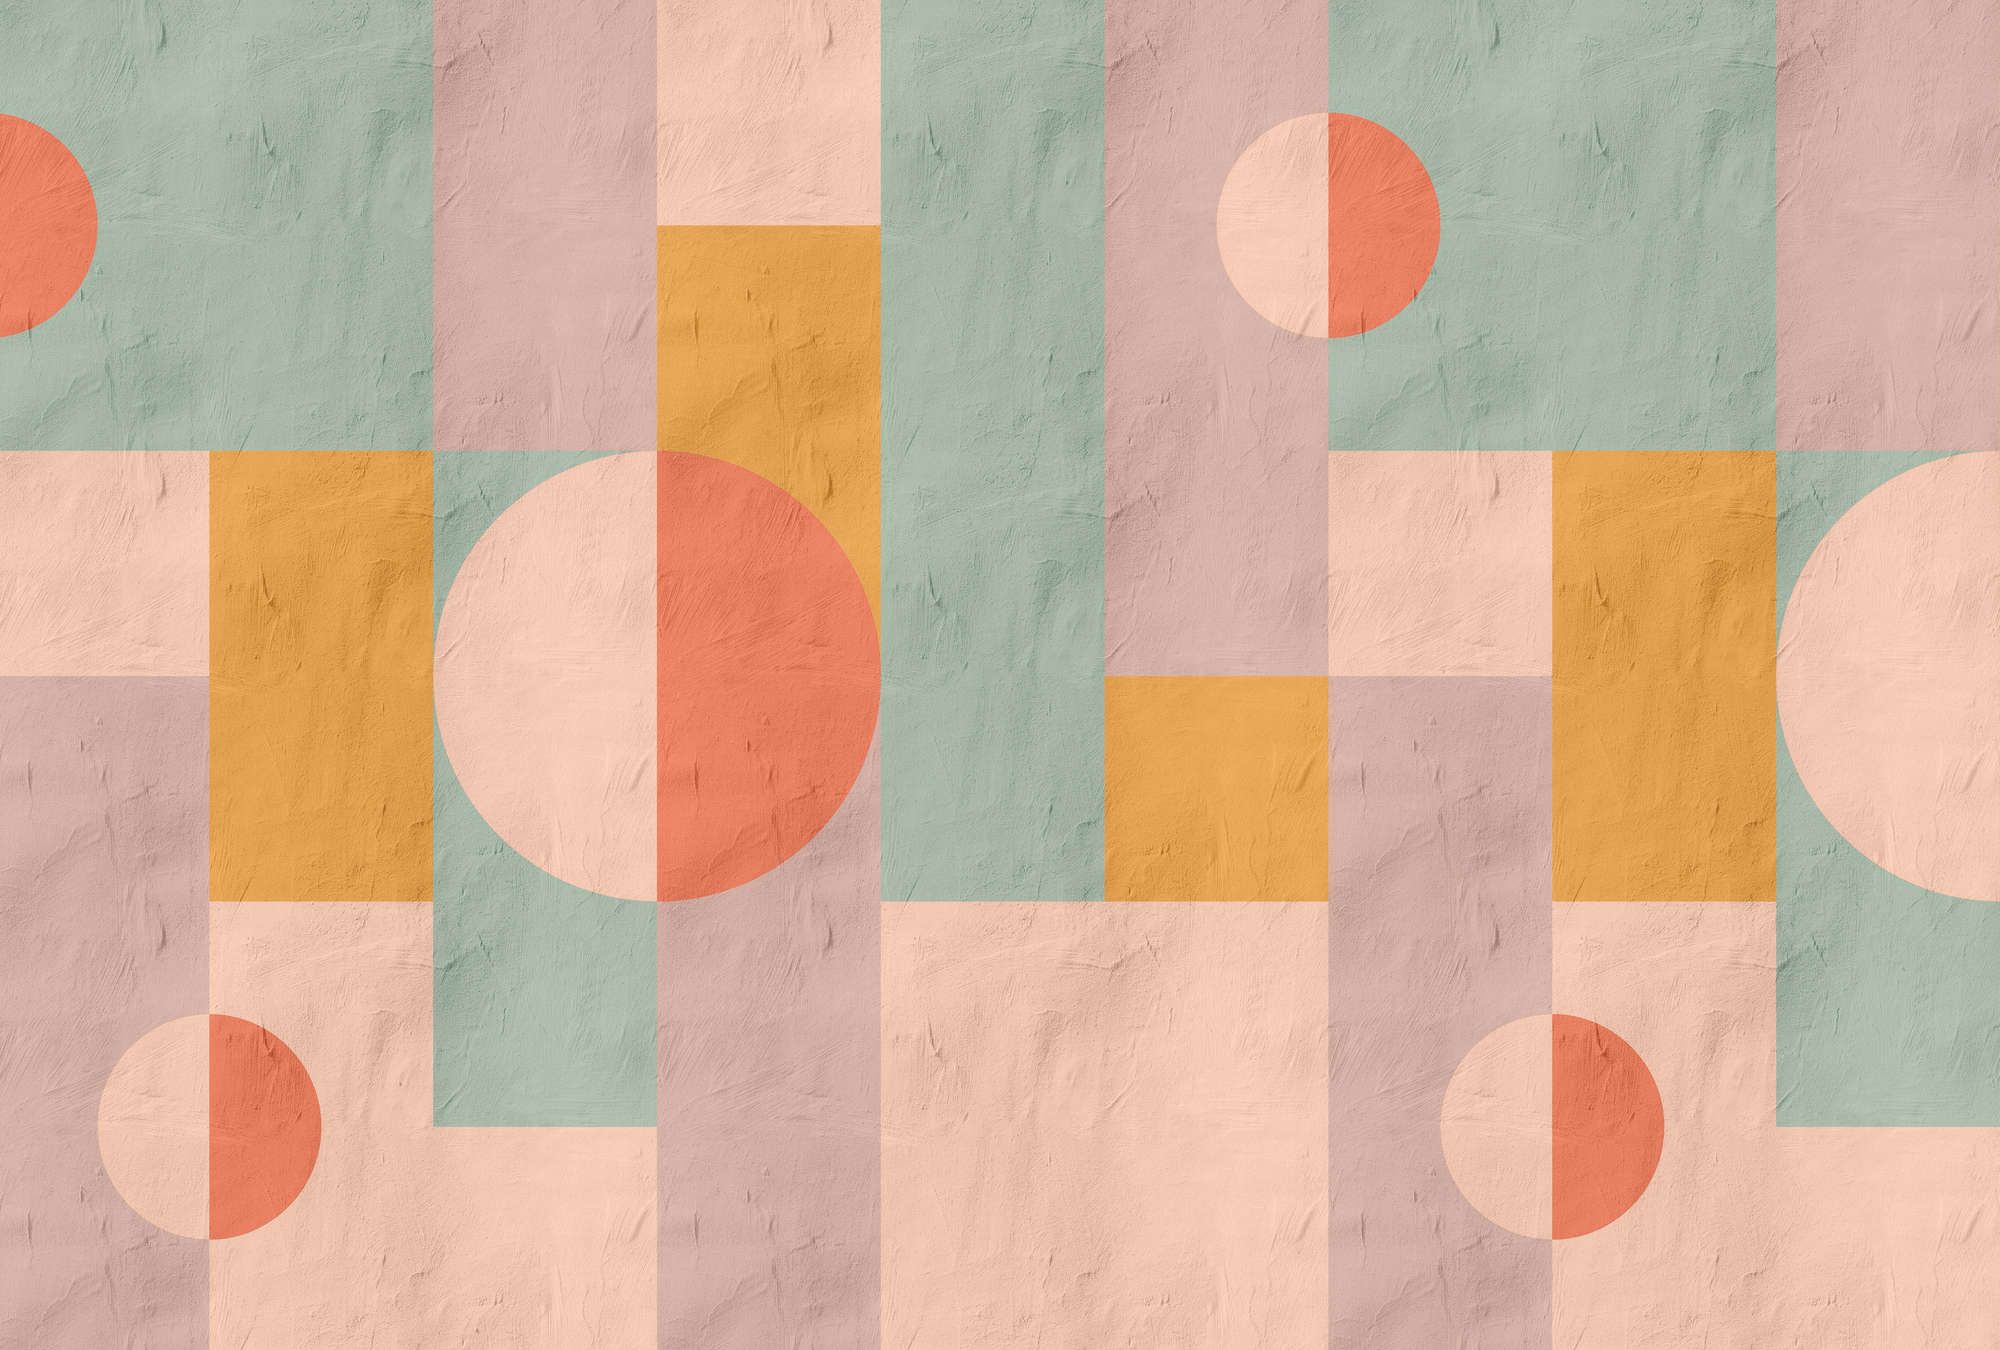             Digital behang »estrella 2« - Grafisch patroon in klei gipslook - rood, oranje, mint | mat, glad vlies
        